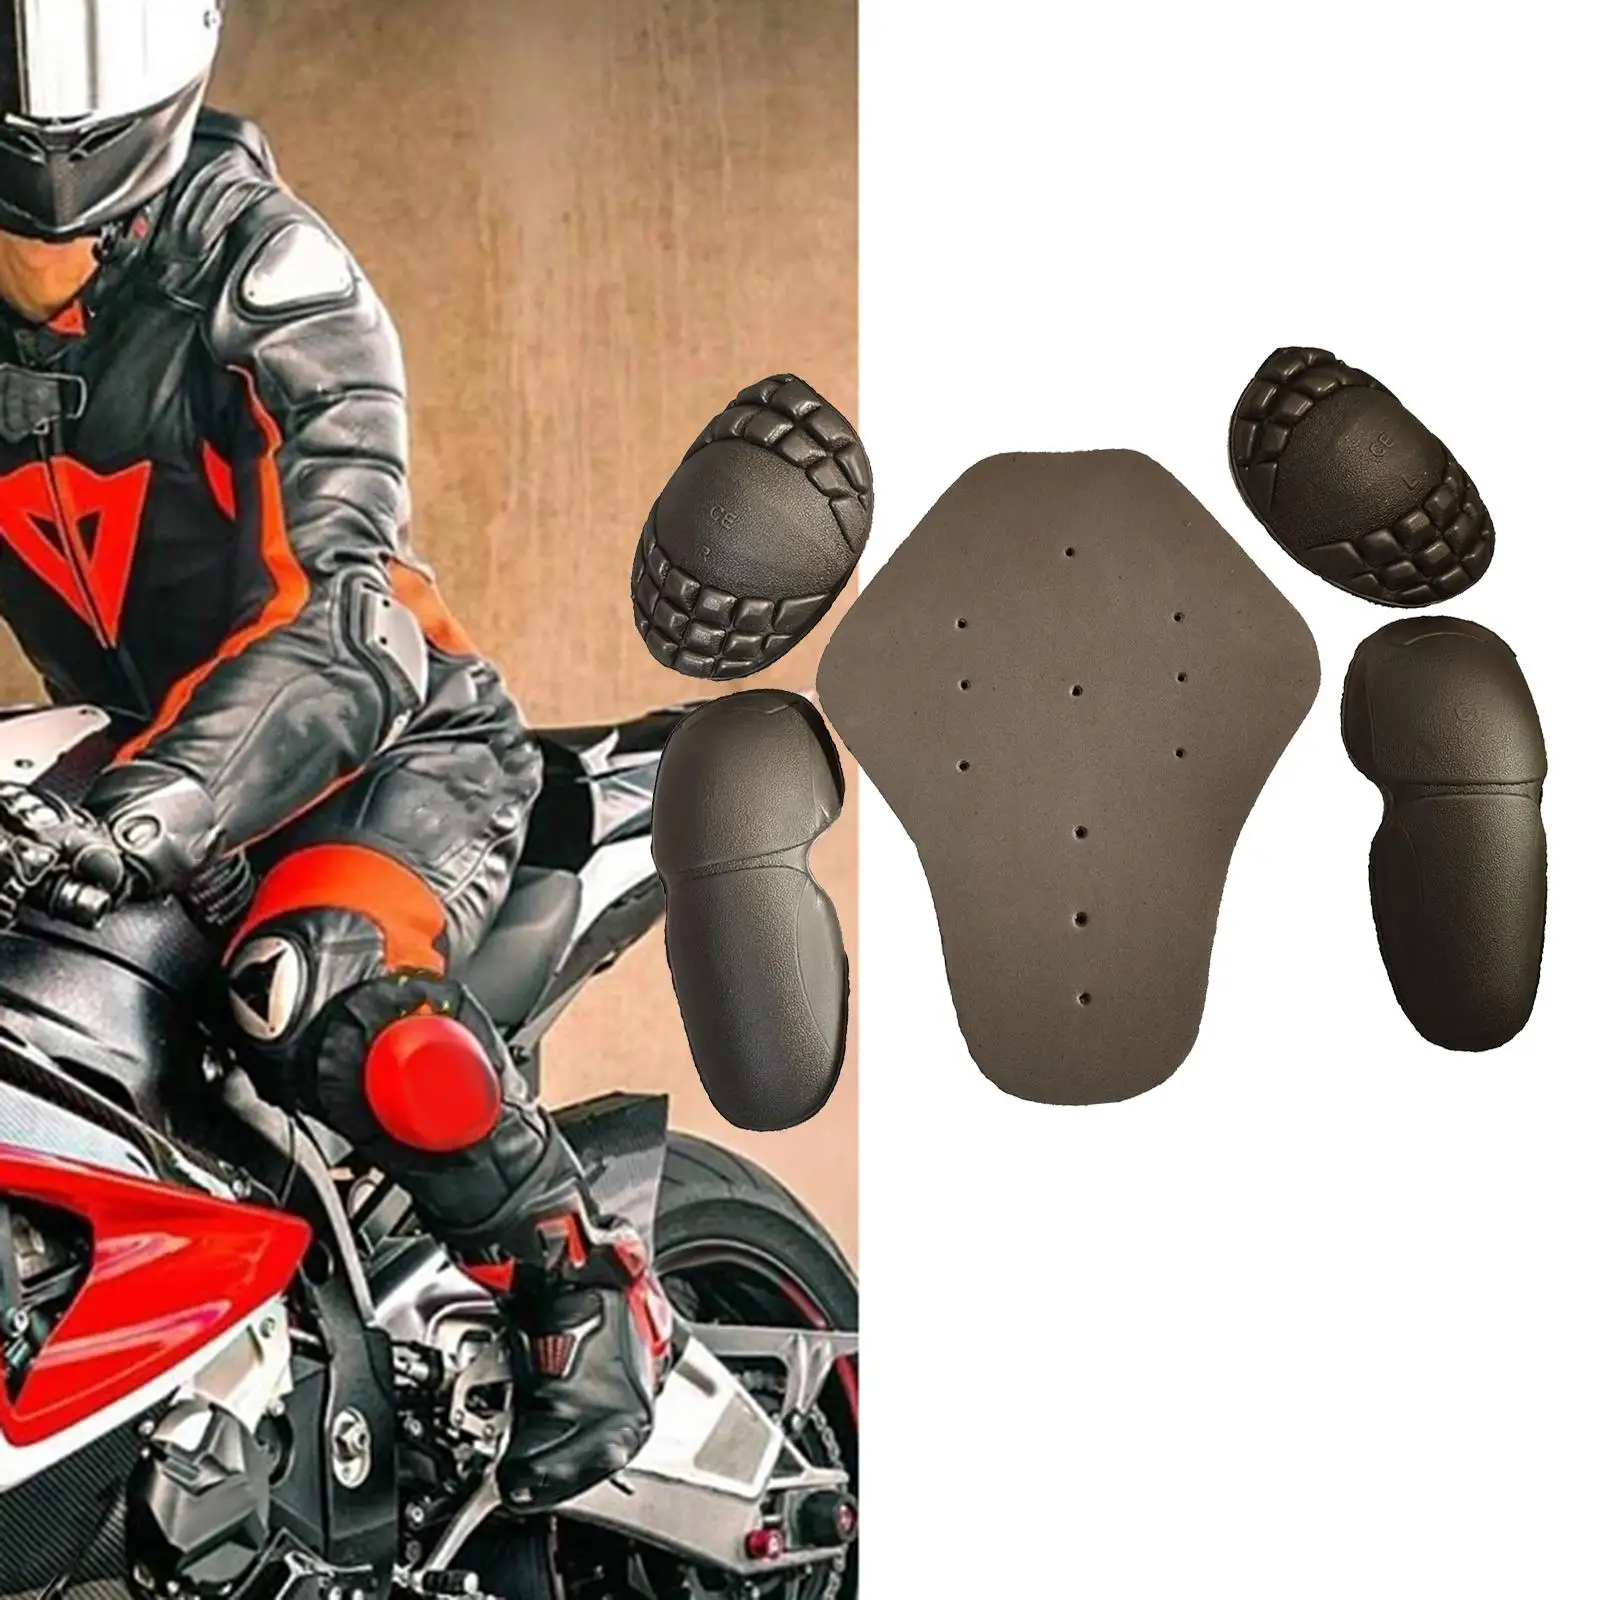 5x Motorbike Body Protective Gear EVA Motorcycle Accessories for Biking